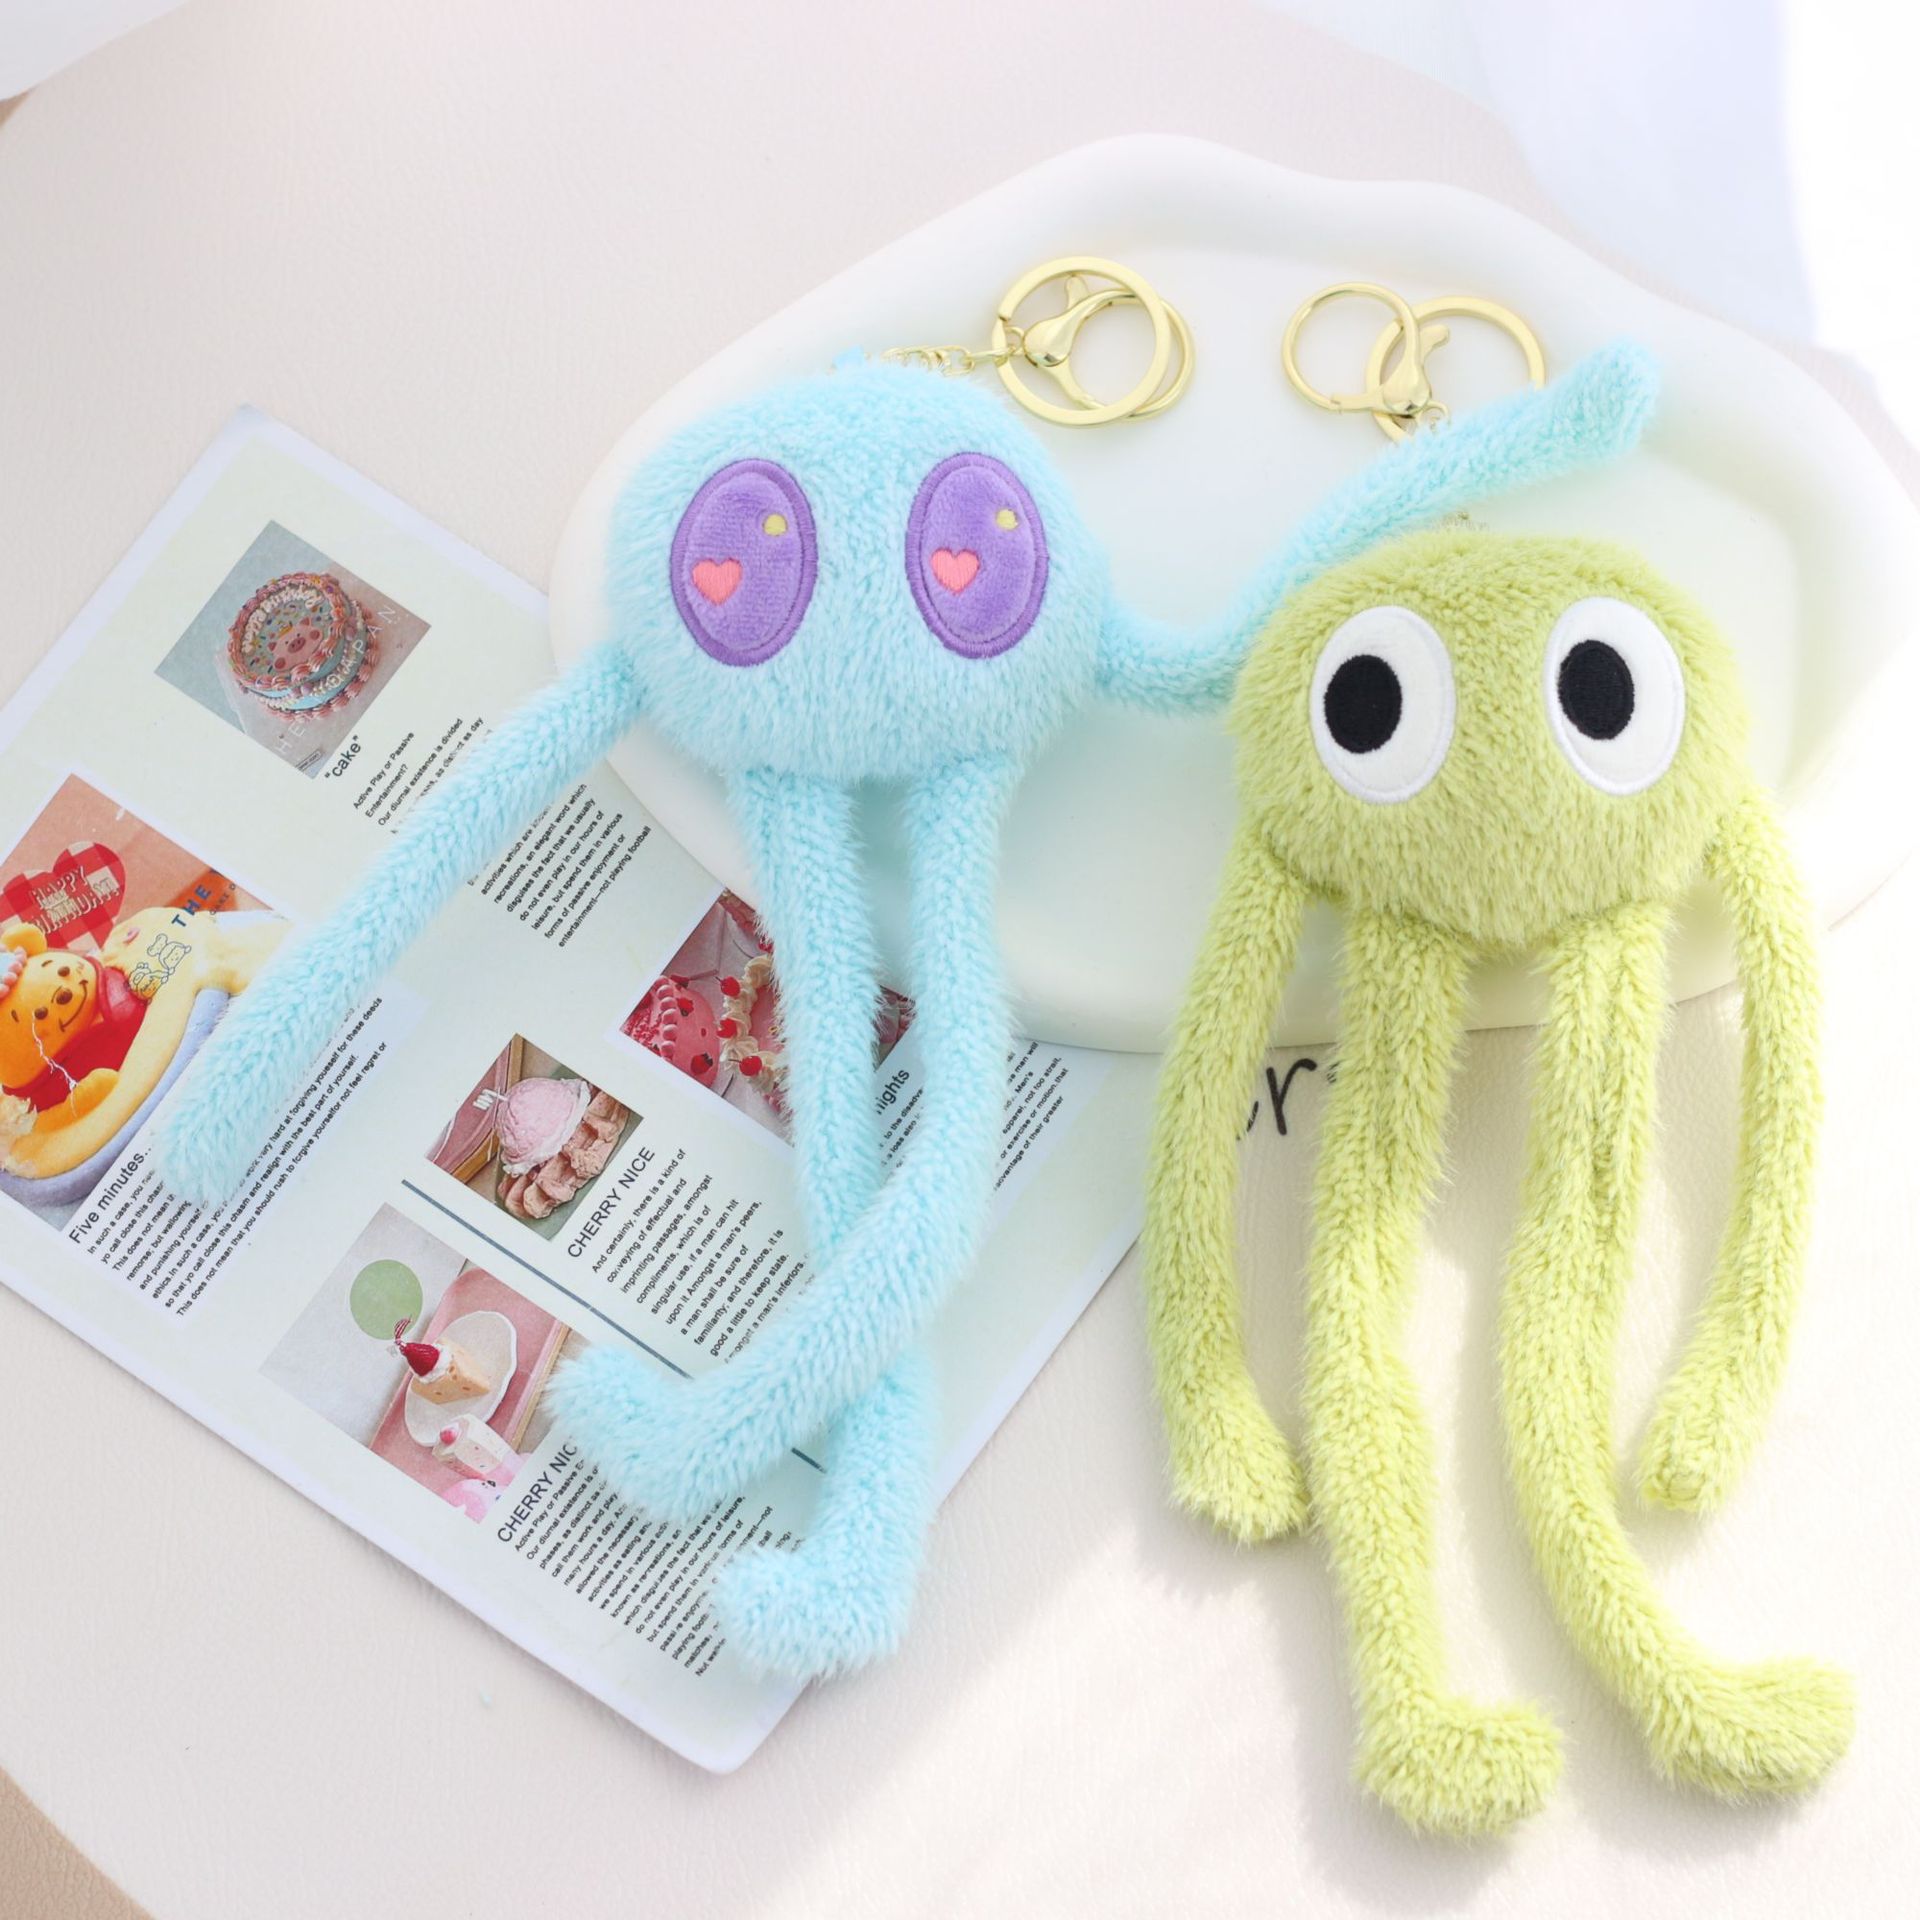 22cm Funny Long Leg Octopus Keychain Plush Stuffed Toy Cute Plush Animal Soft Doll Pendant for